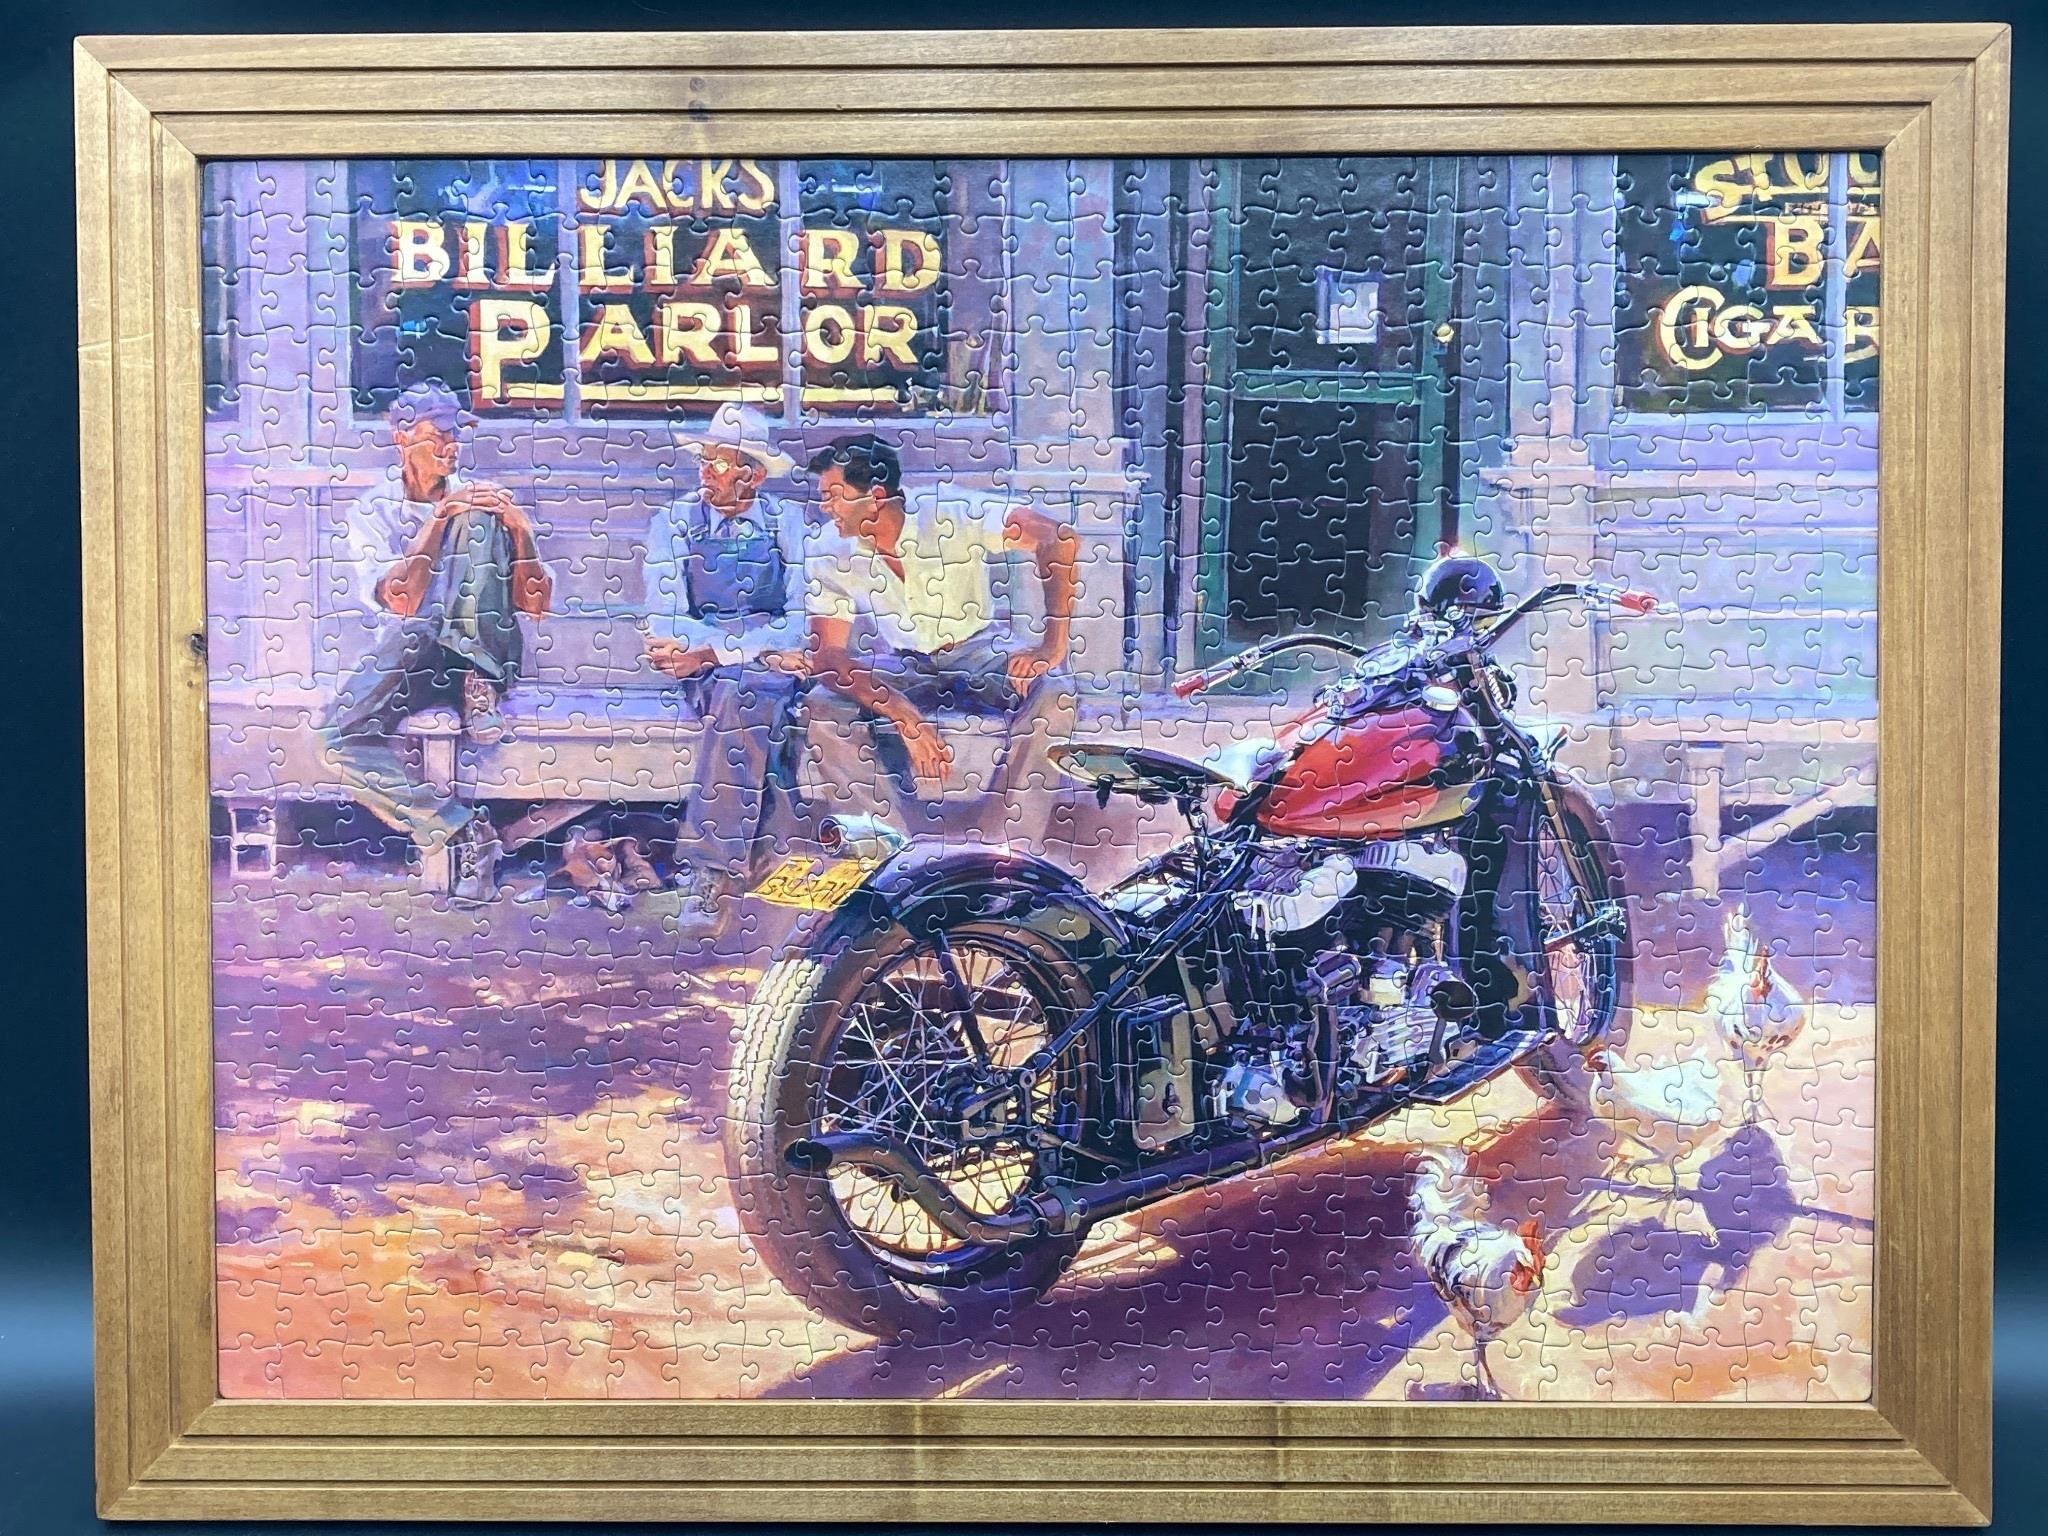 18x24” Harley-Davidson Motorcycle Puzzle Art